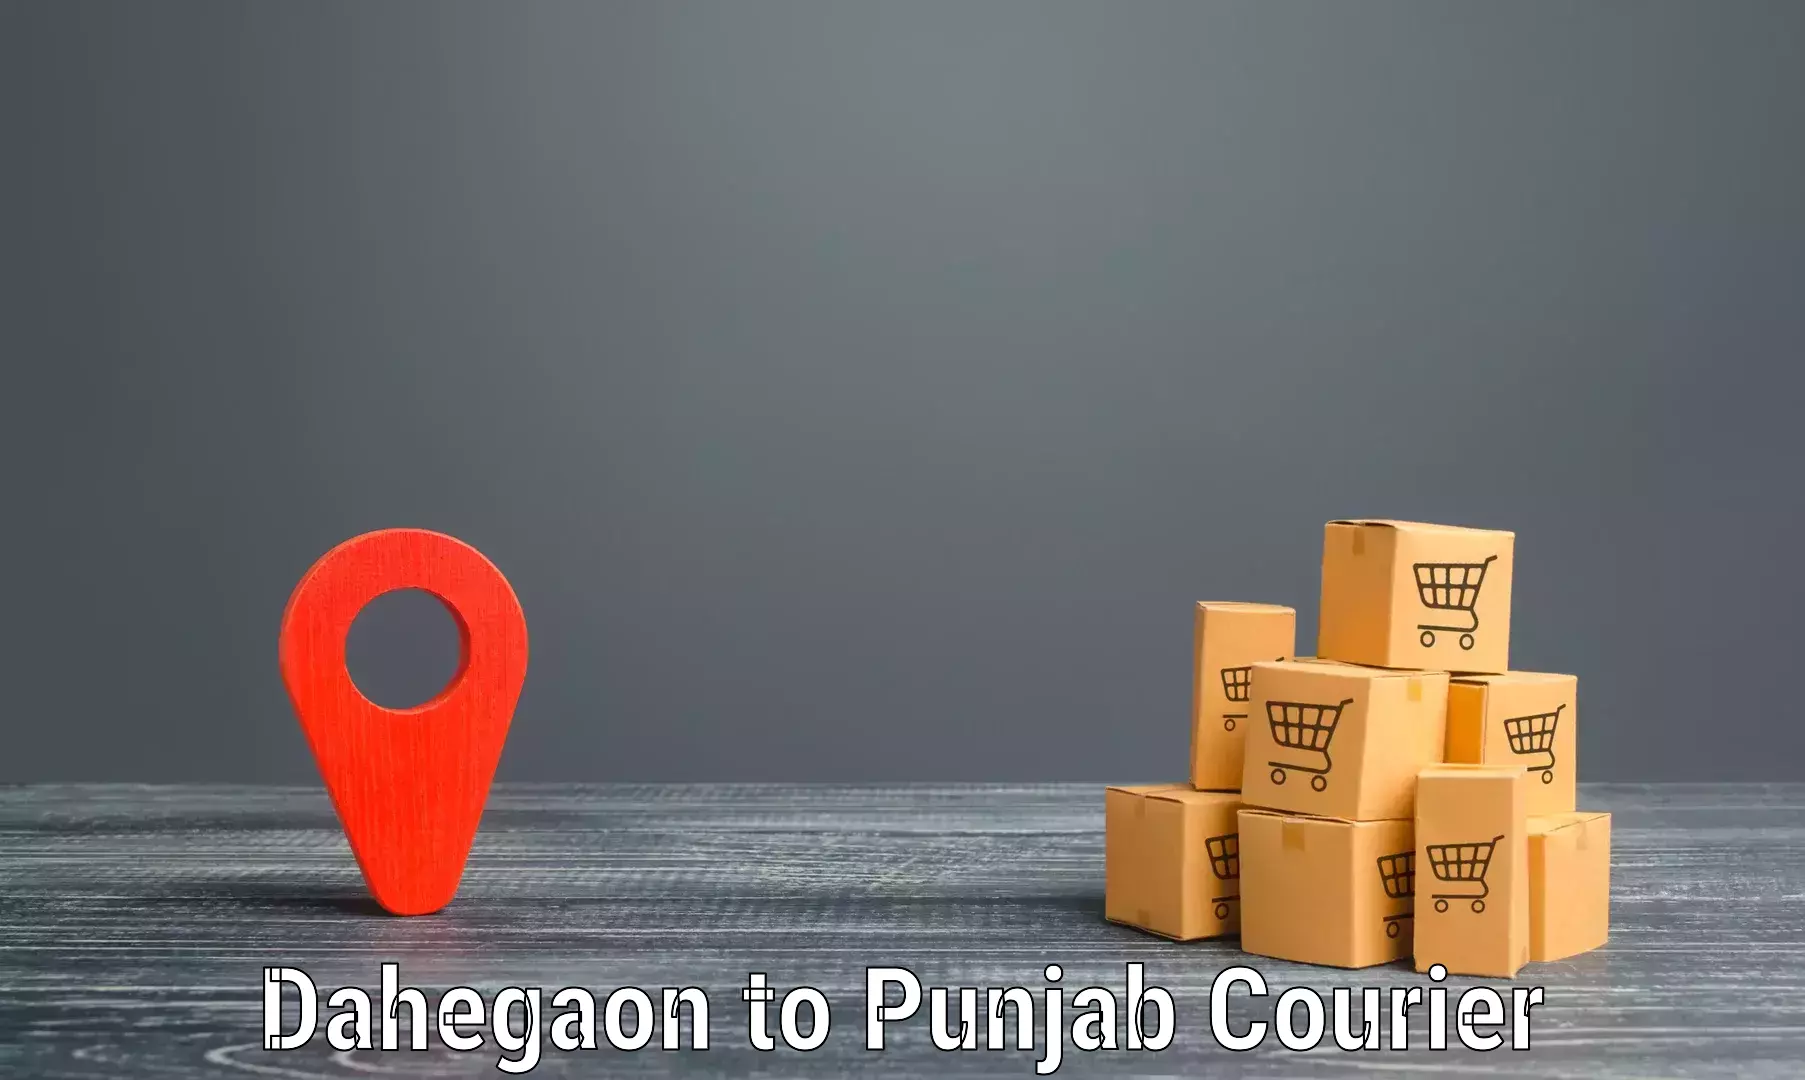 Global logistics network Dahegaon to Amritsar